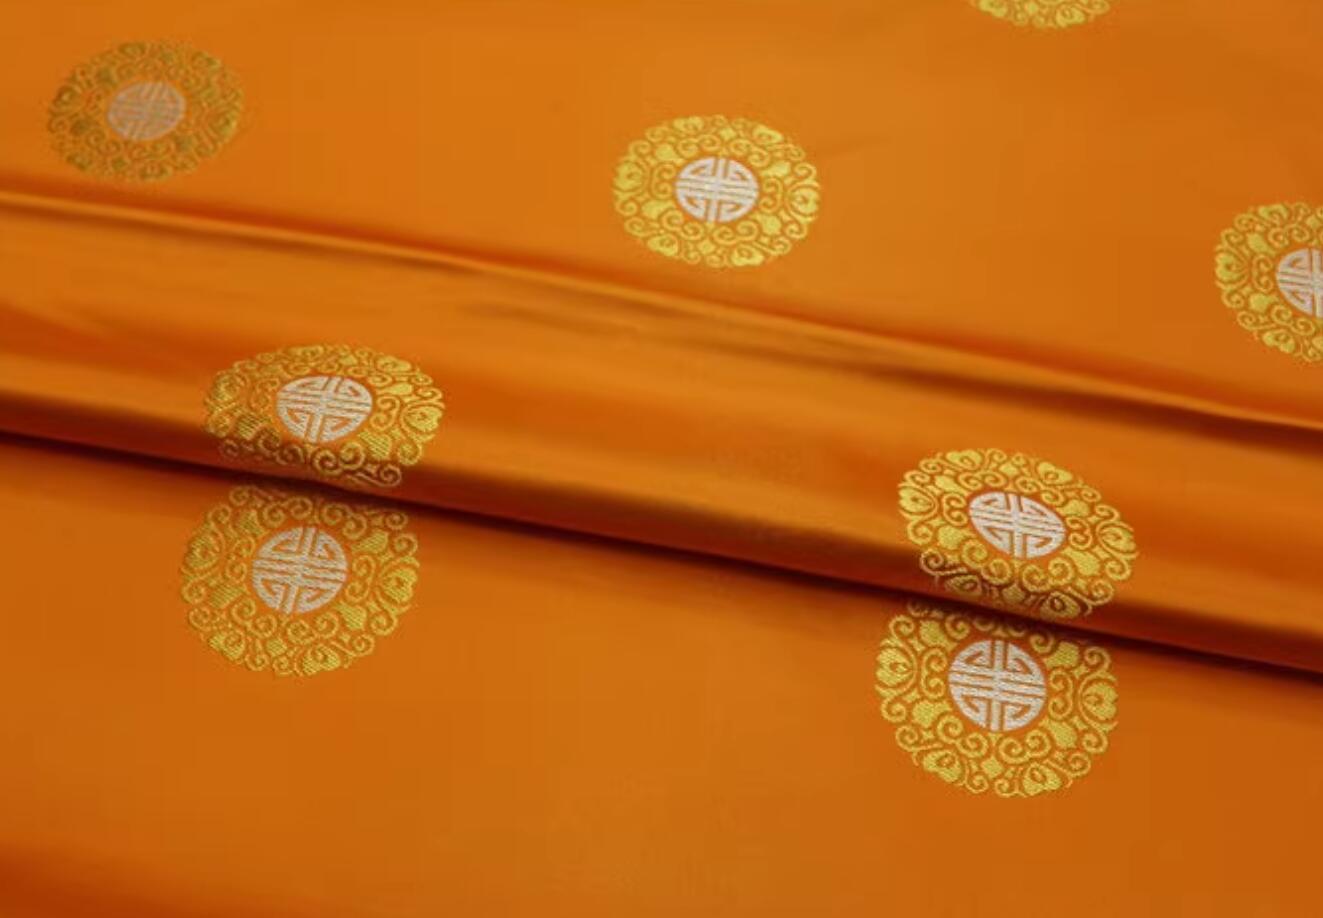 Tibetan Robe Cloth Asian Traditional Satin Material Chinese Royal Lucky Pattern Design Orange Brocade Fabric